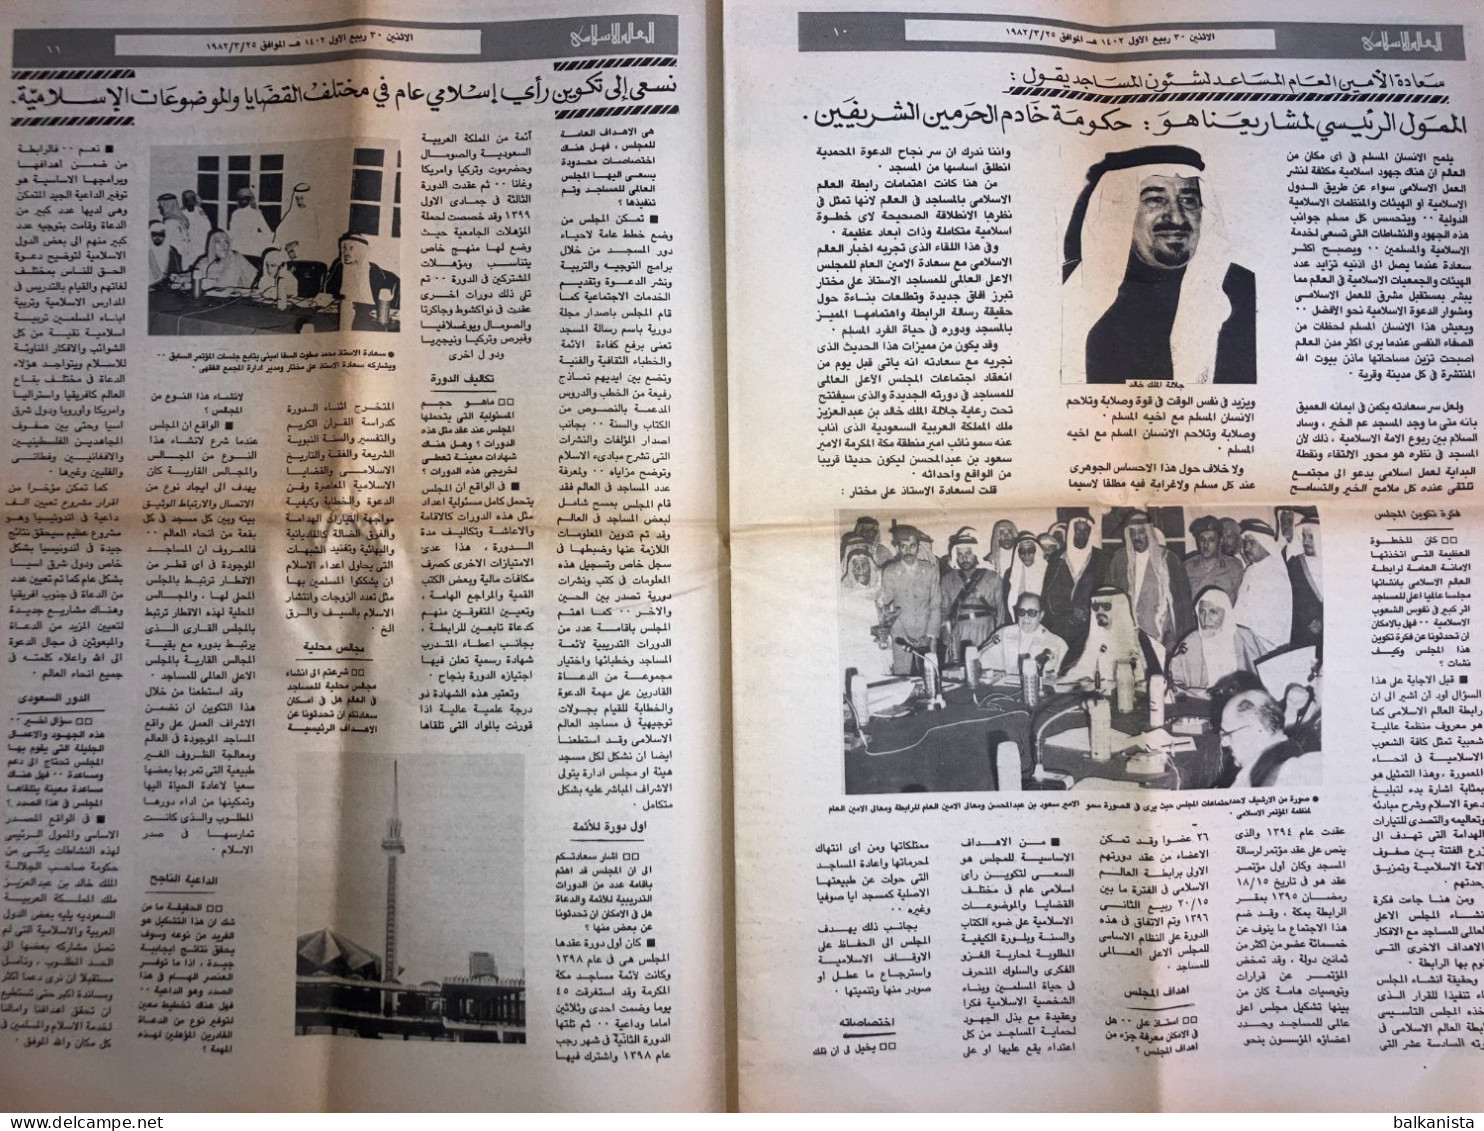 Saudi Arabia Akhbar al-Alam al-Islami Newspaper 25 March 1982